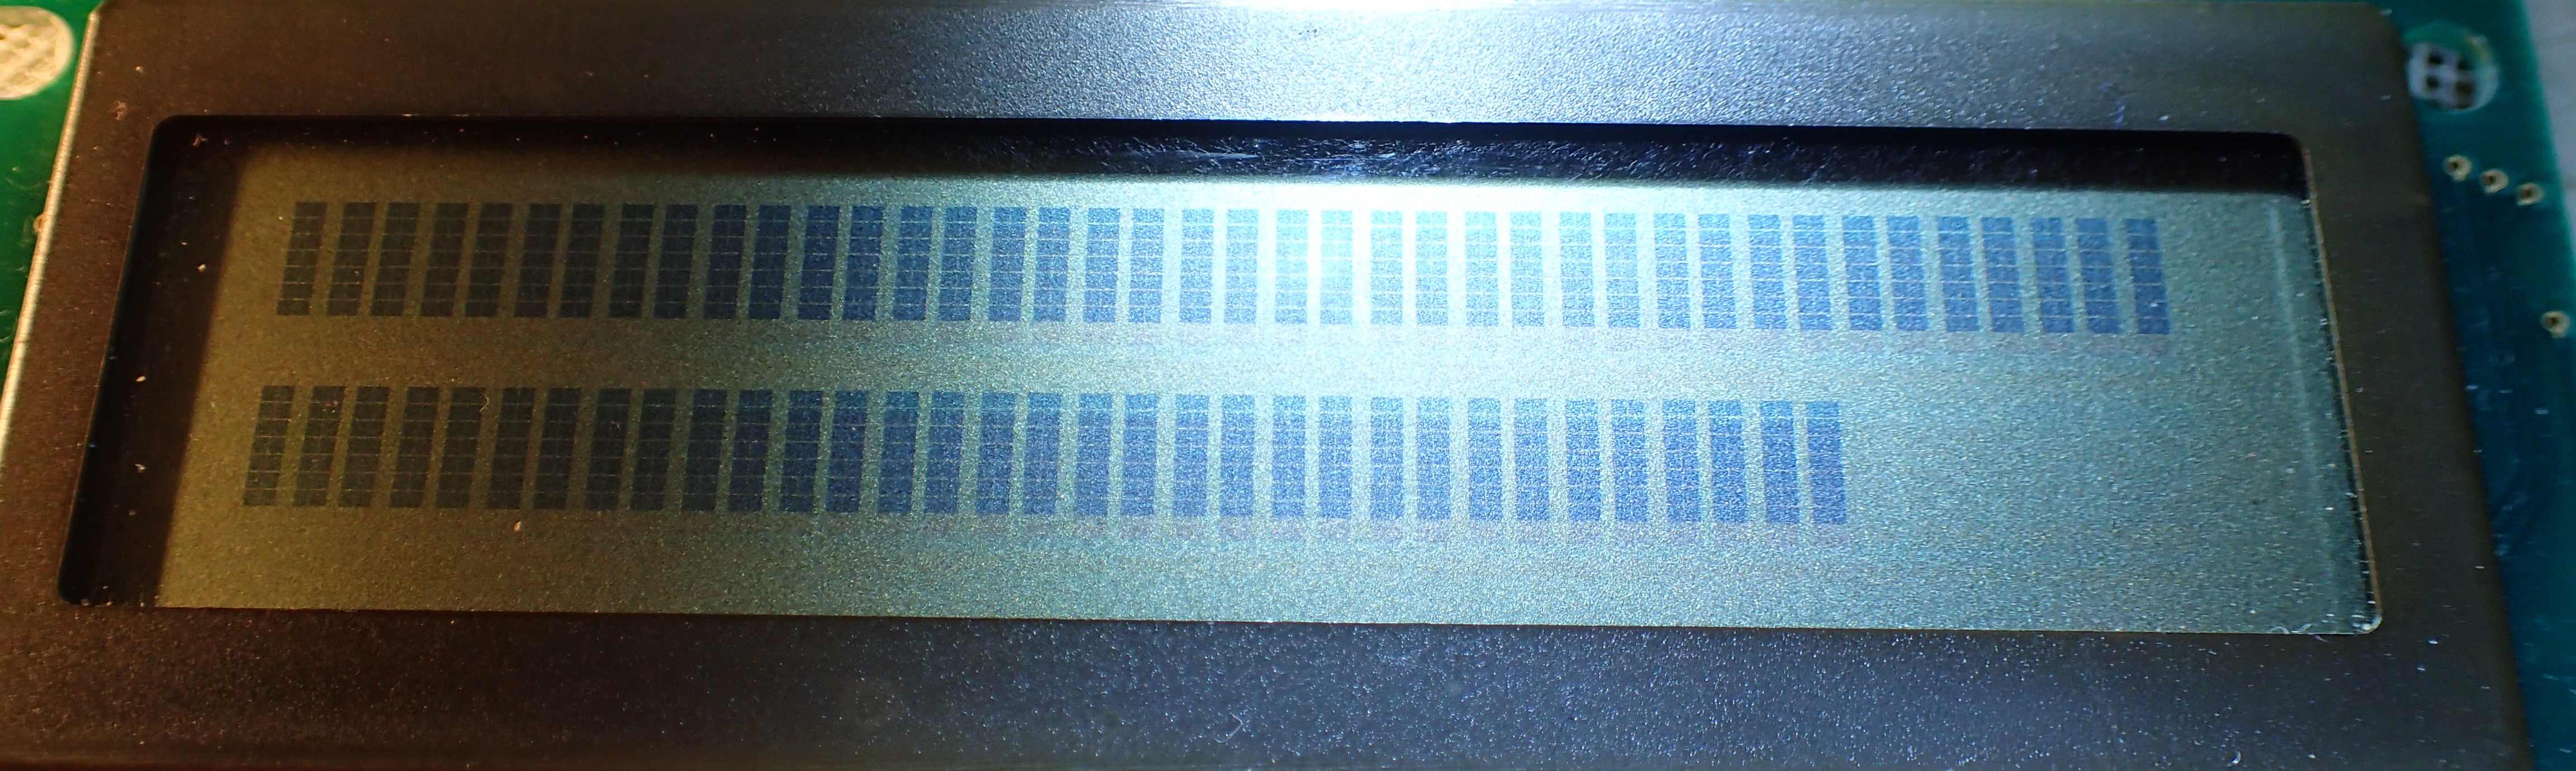 uPD7228 LCD displaying 2 bar graphs